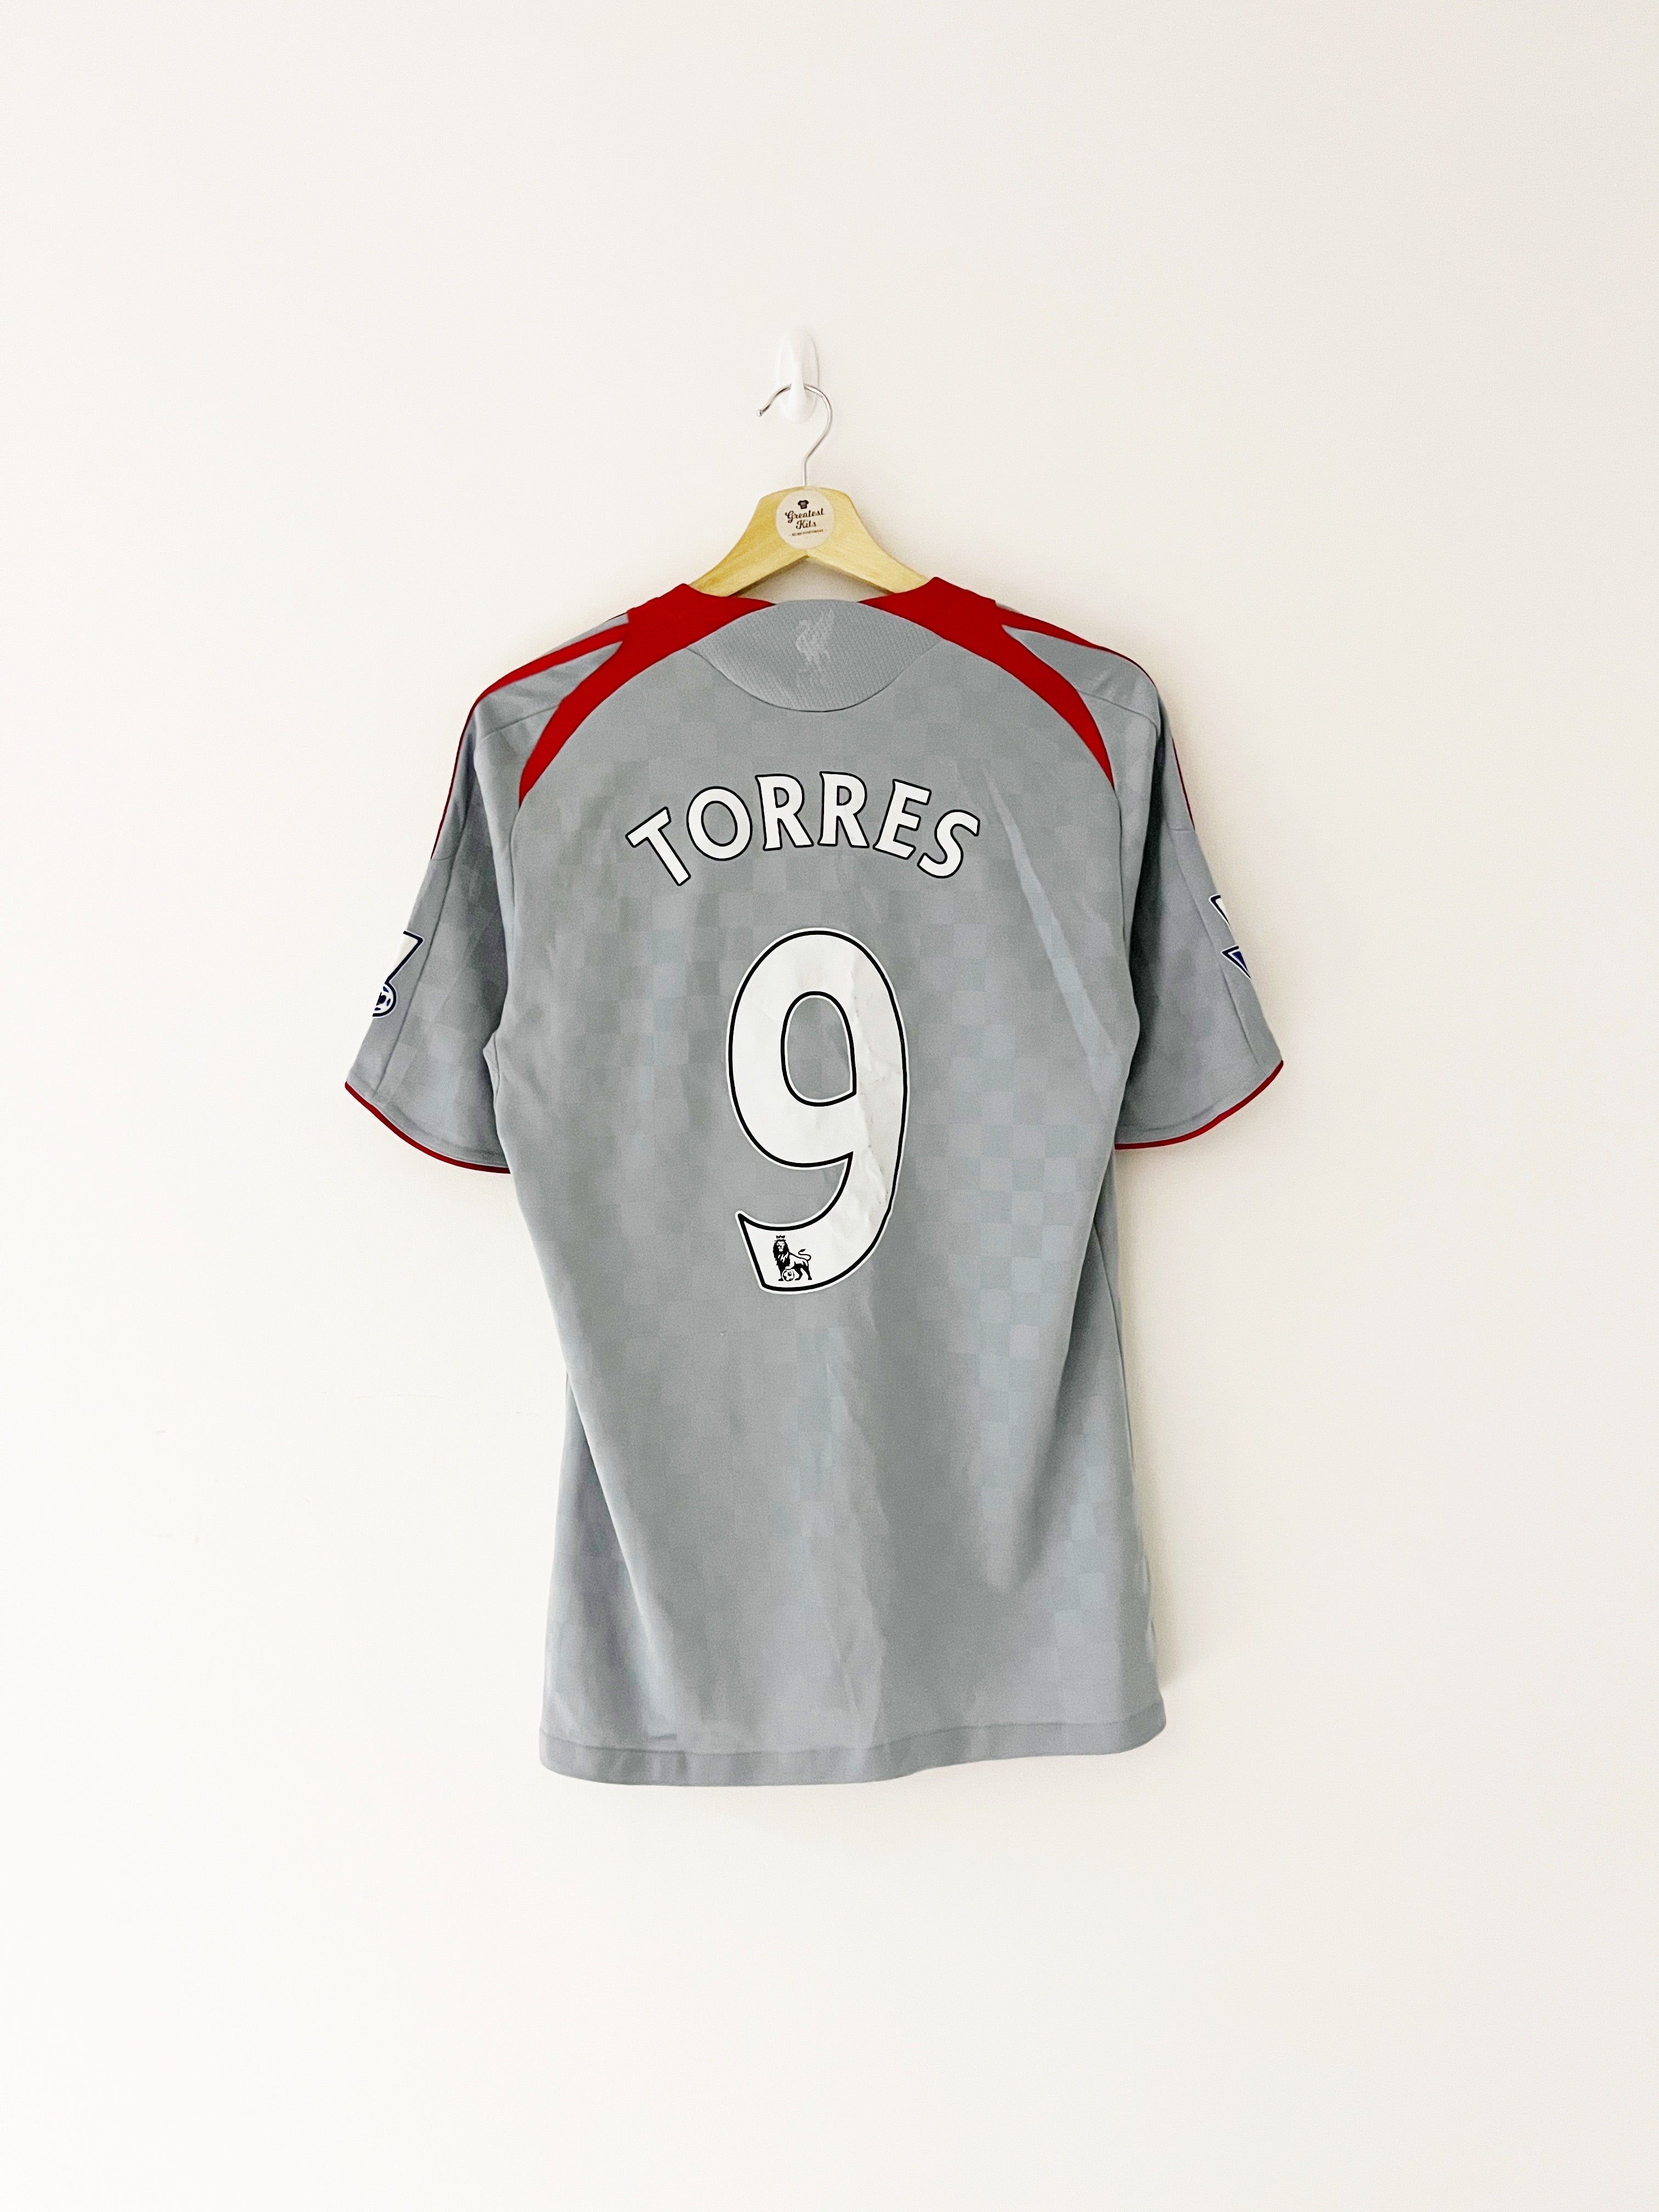 2008/09 Liverpool Away Shirt Torres #9 (S) 7.5/10